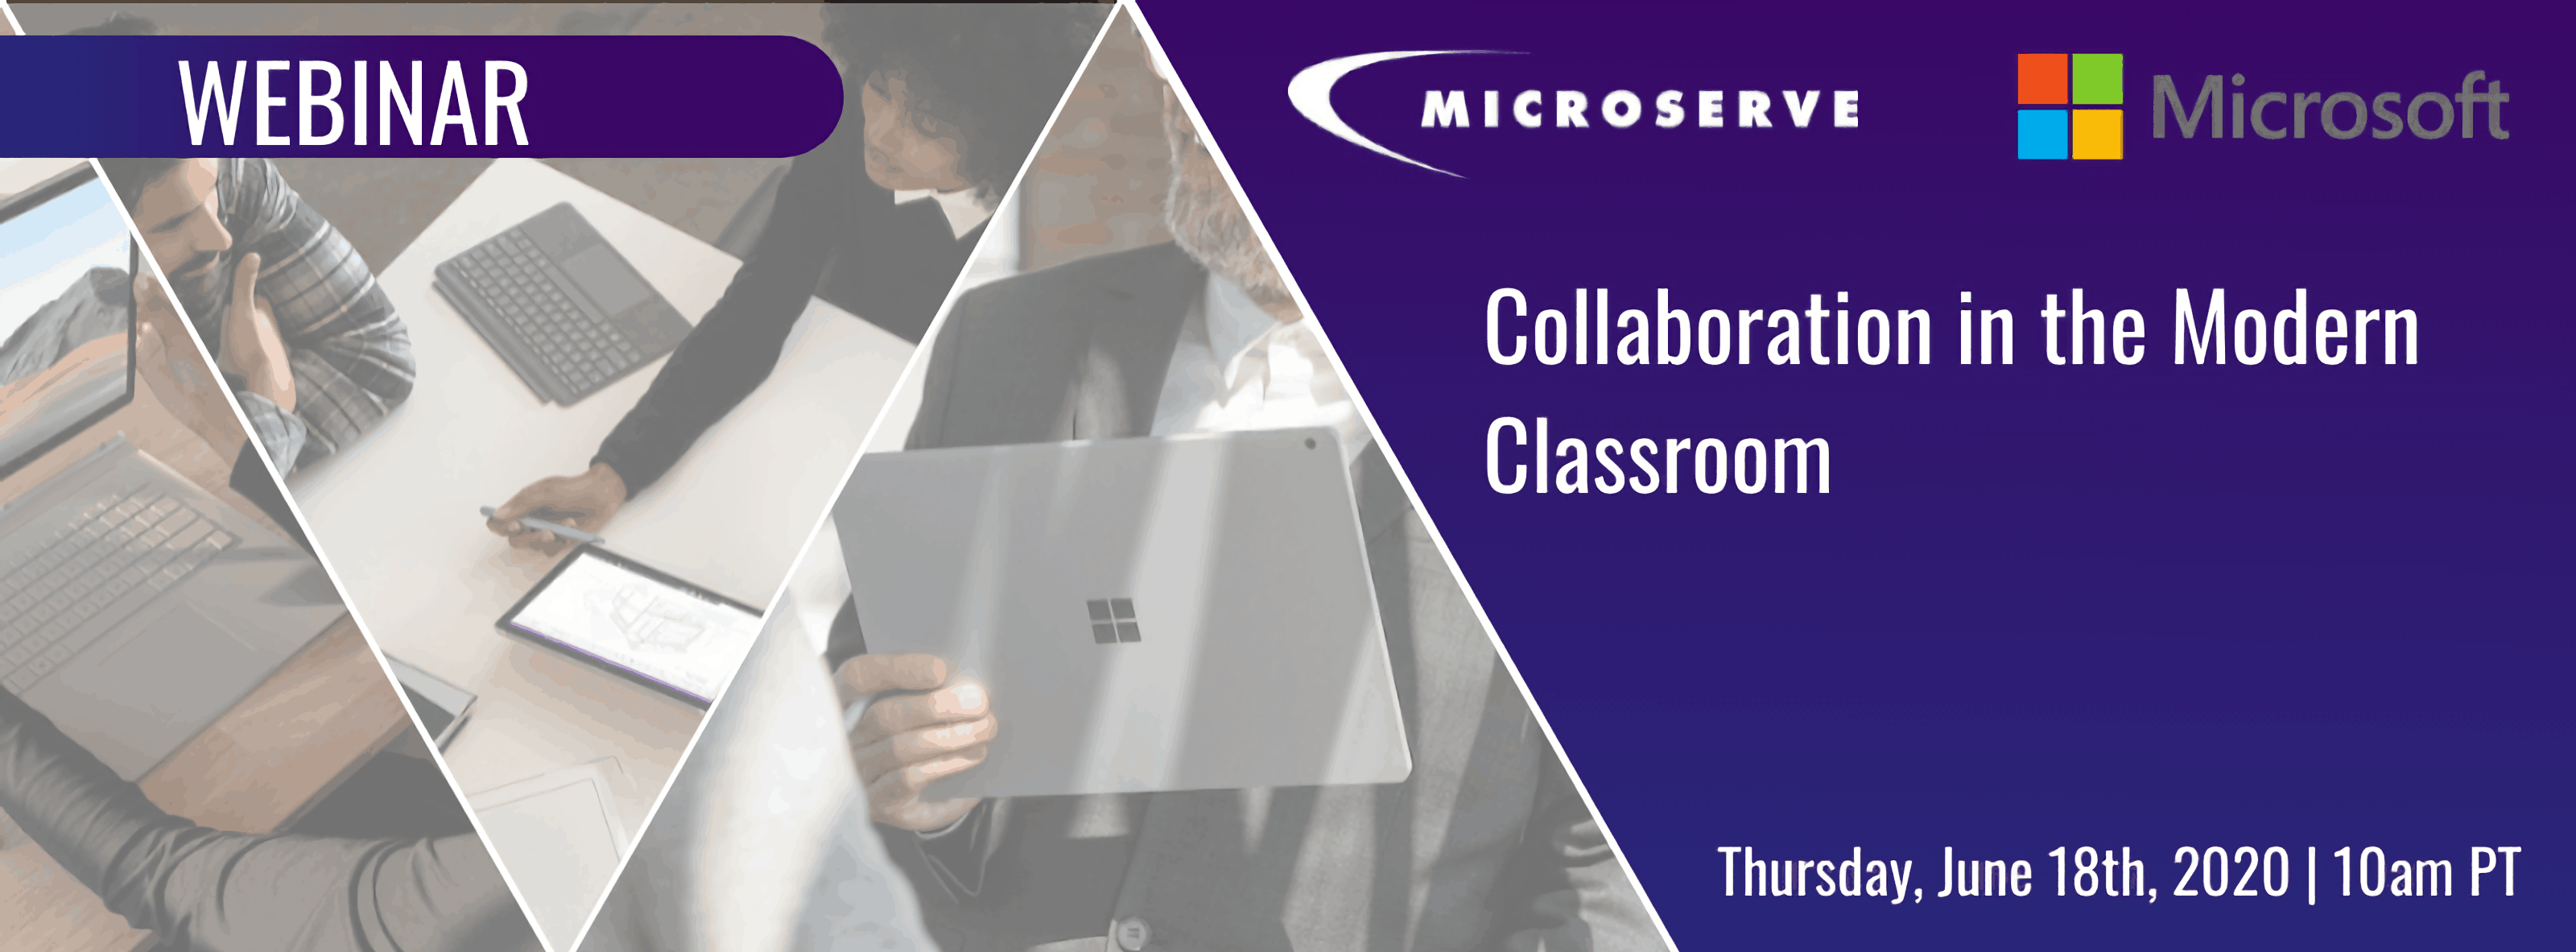 Collaboration in the Modern Classroom Microsoft Webinar